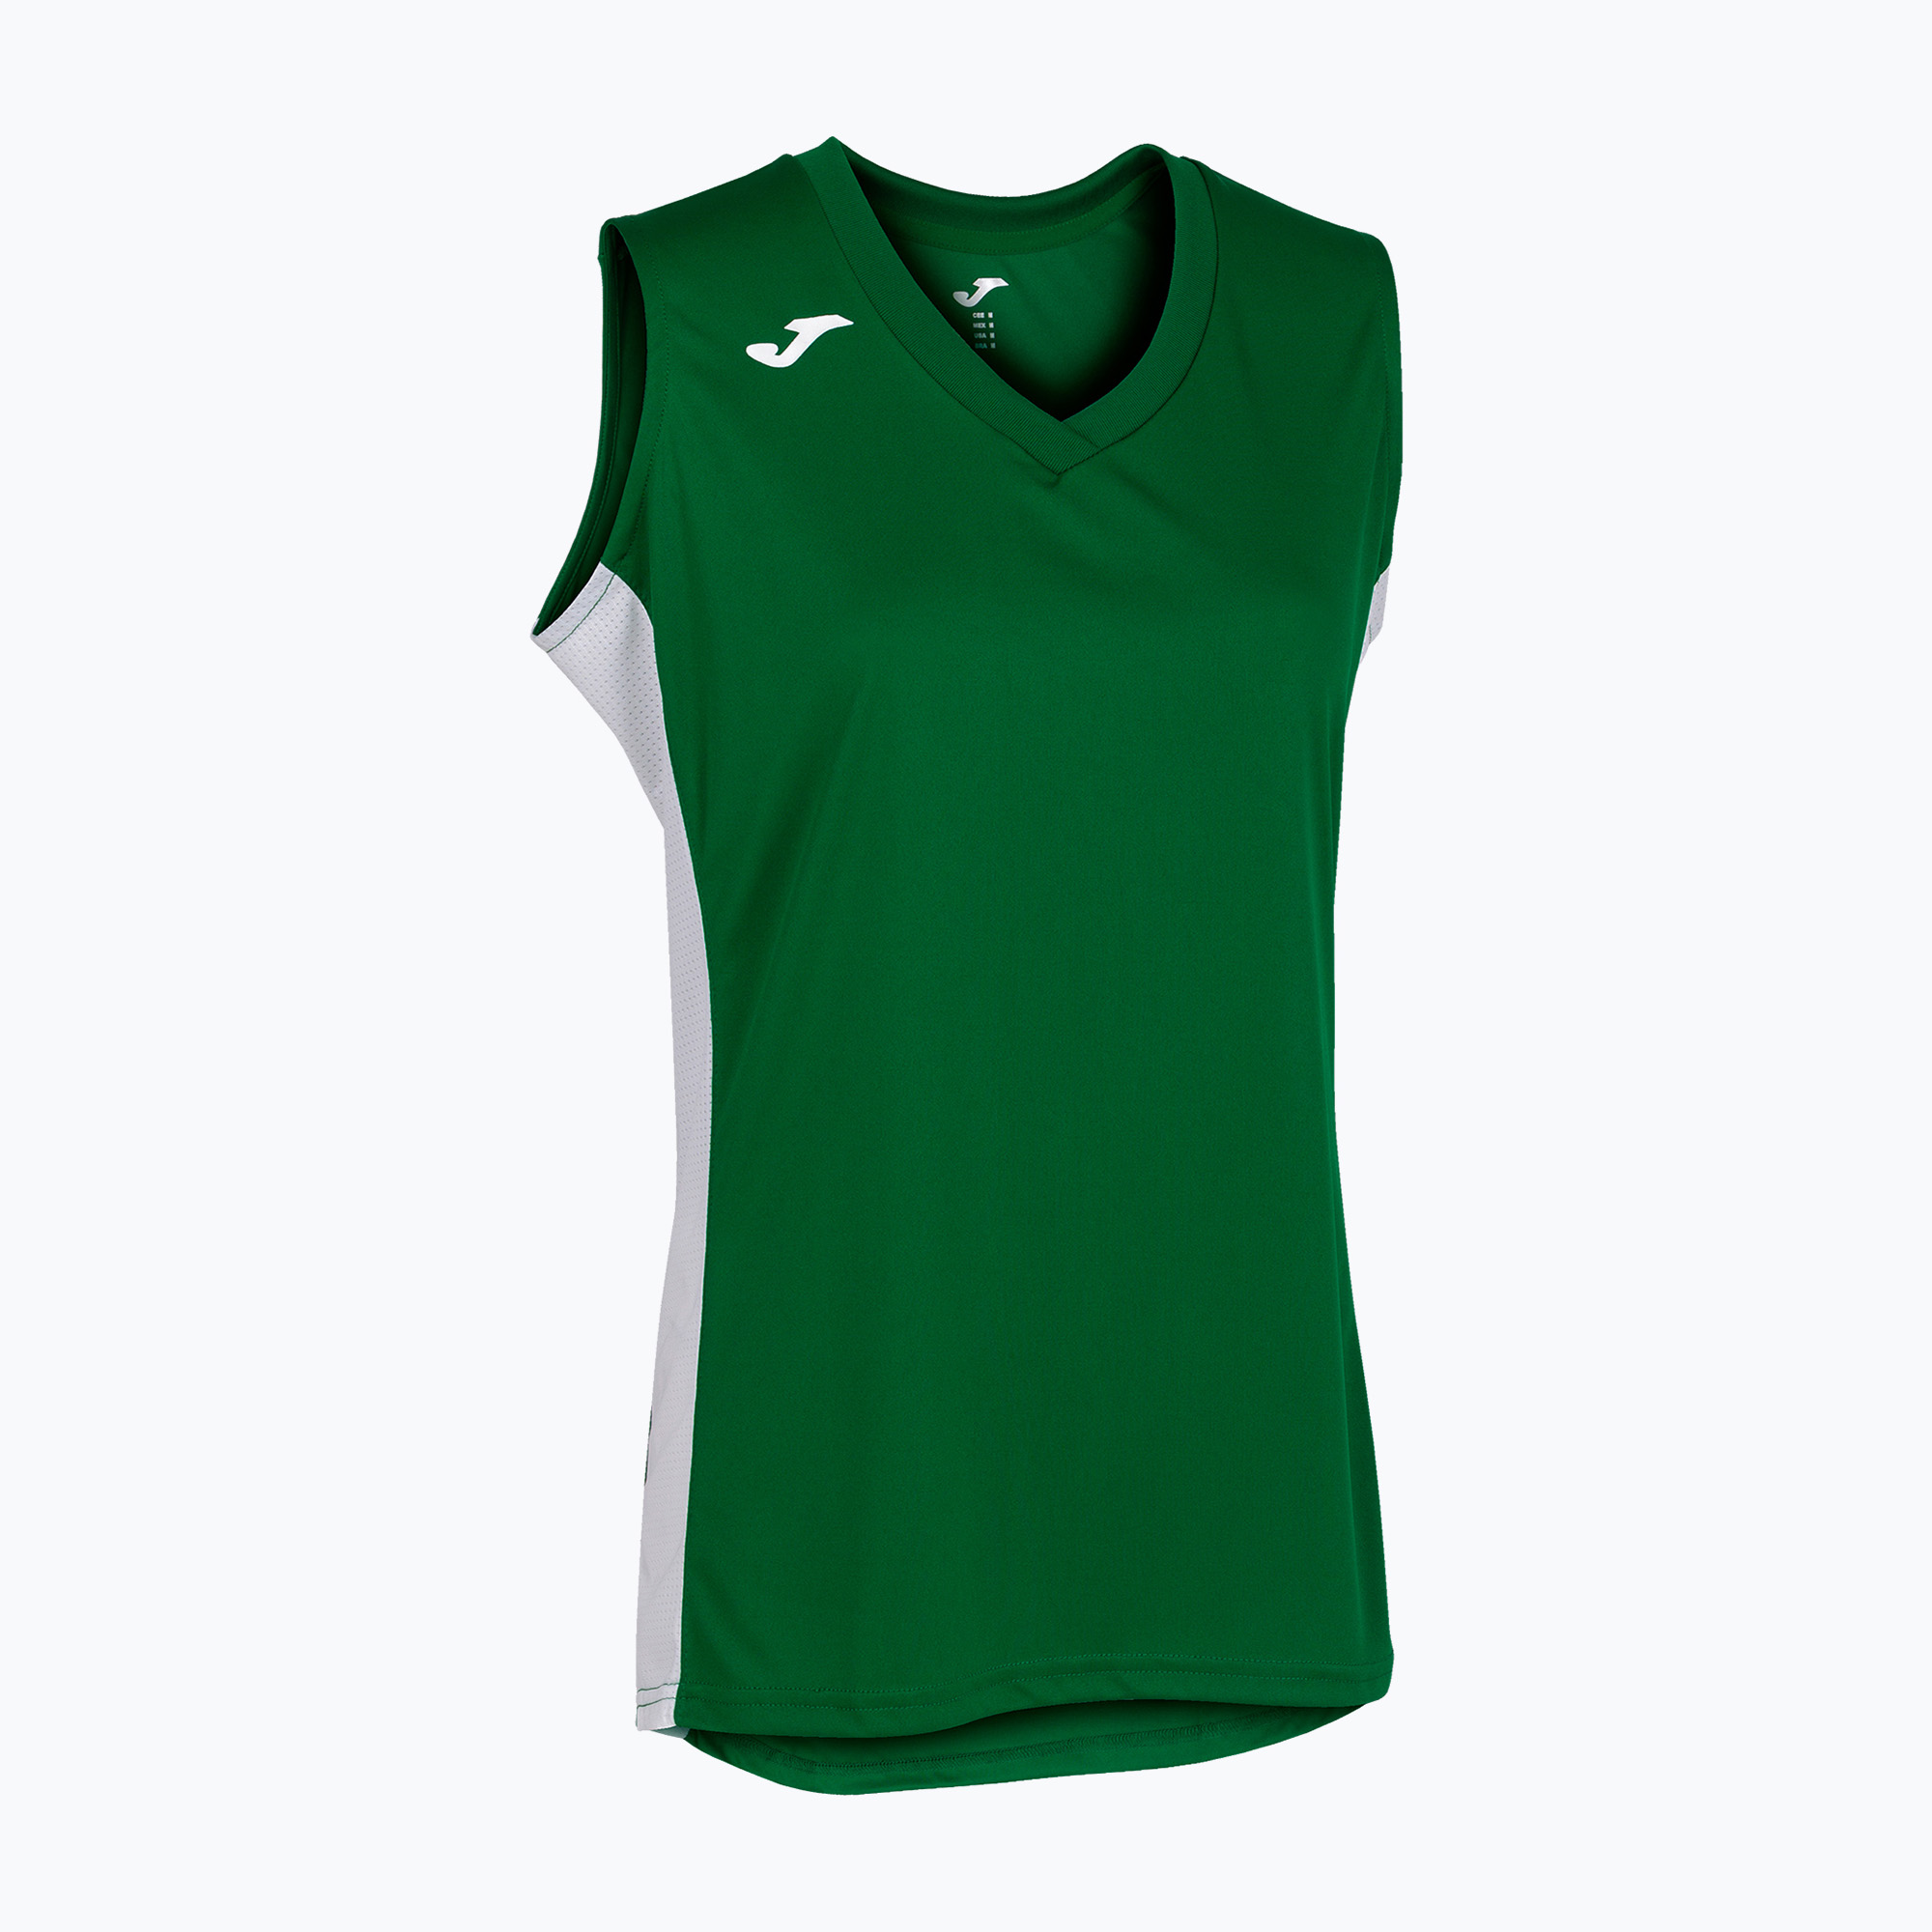 Dámsky basketbalový dres Joma Cancha III zeleno-biely 901129.452